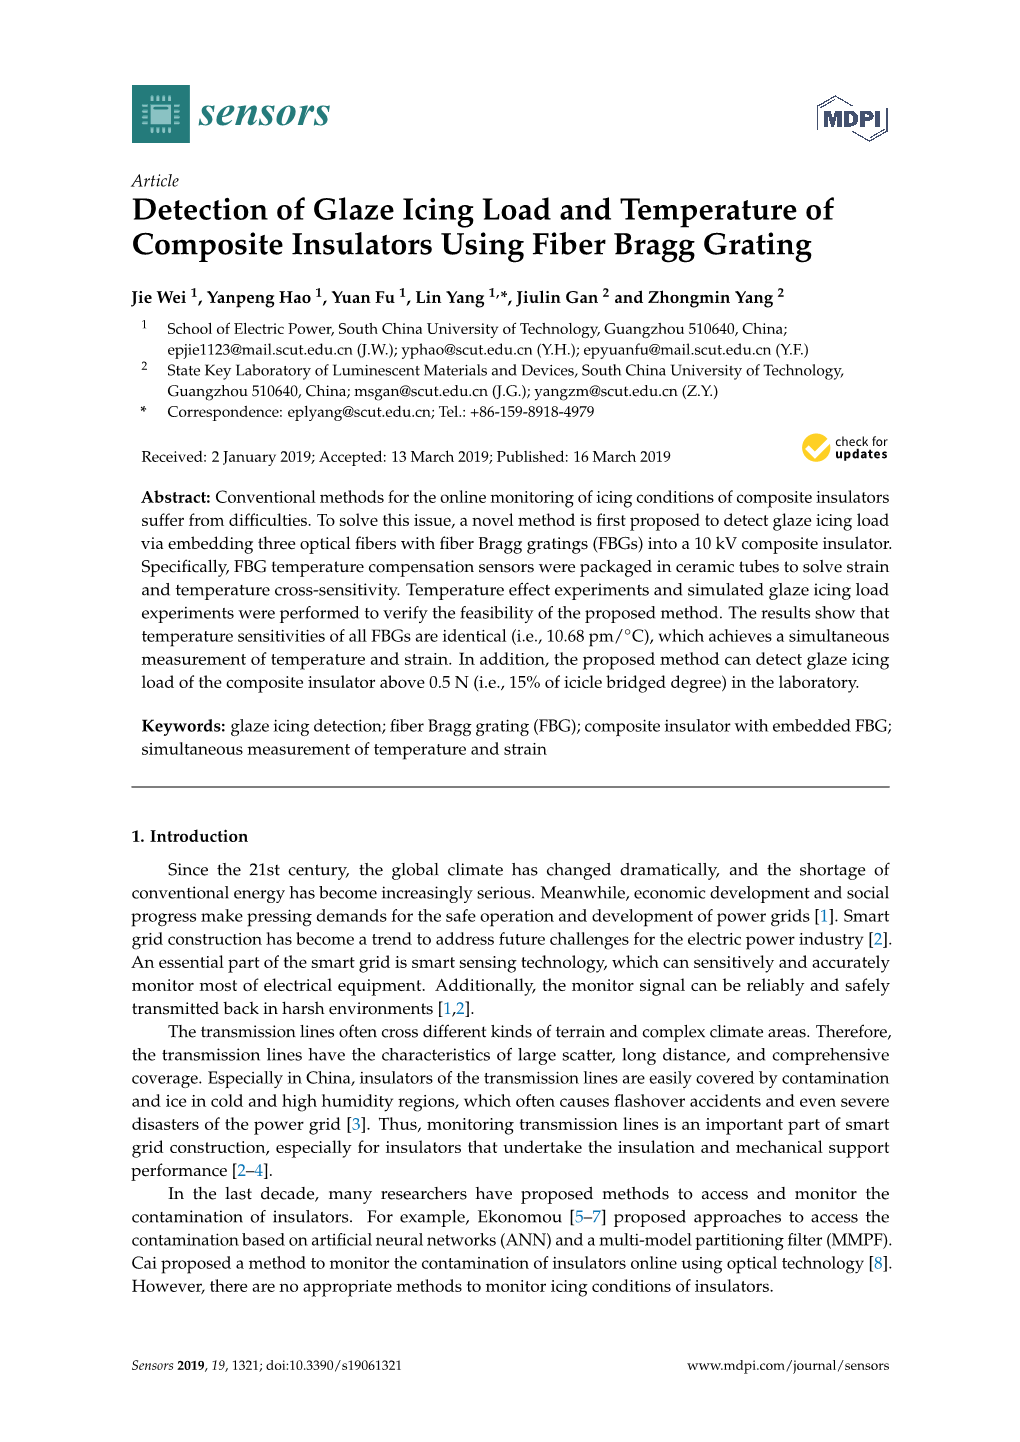 Detection of Glaze Icing Load and Temperature of Composite Insulators Using Fiber Bragg Grating